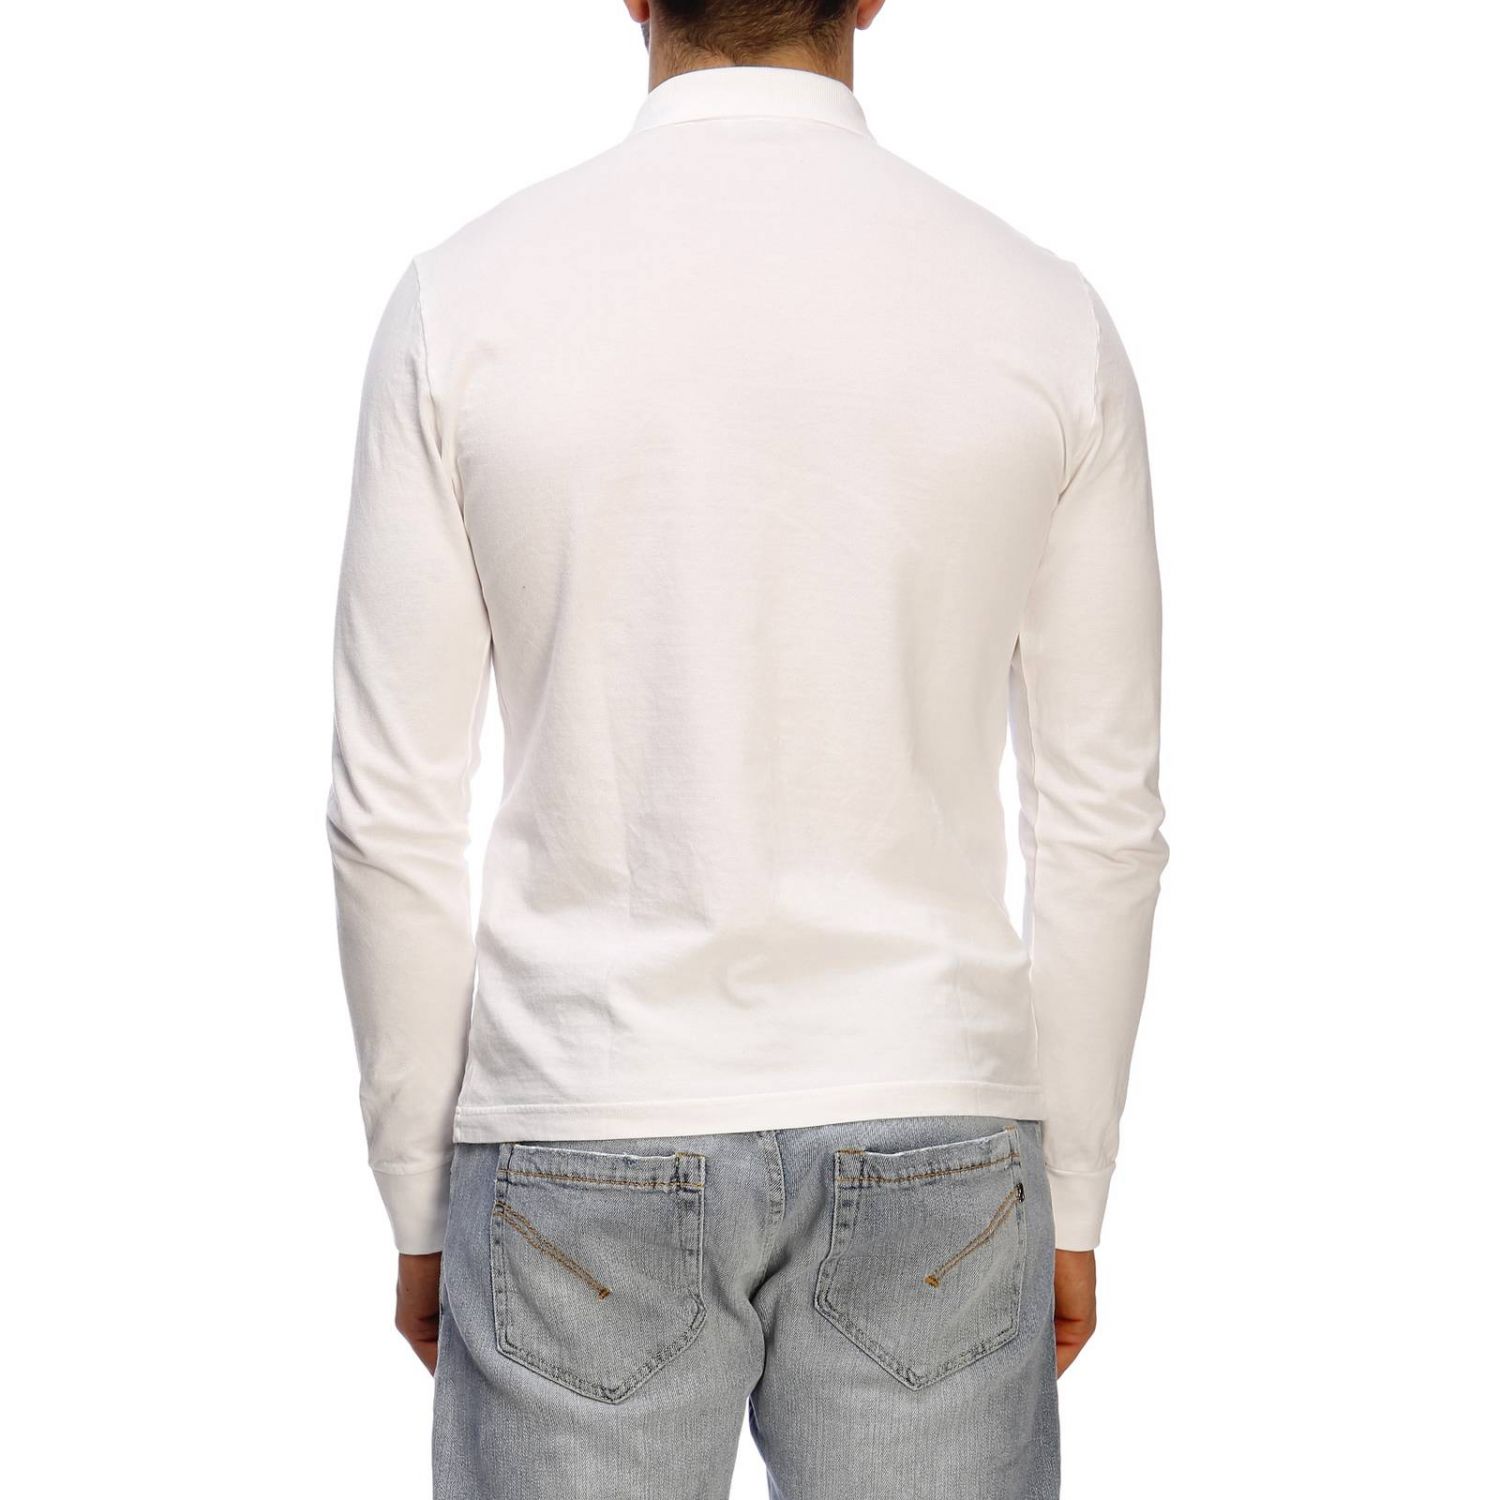 Brooksfield Outlet: T-shirt men - White | T-Shirt Brooksfield 201B A020 ...